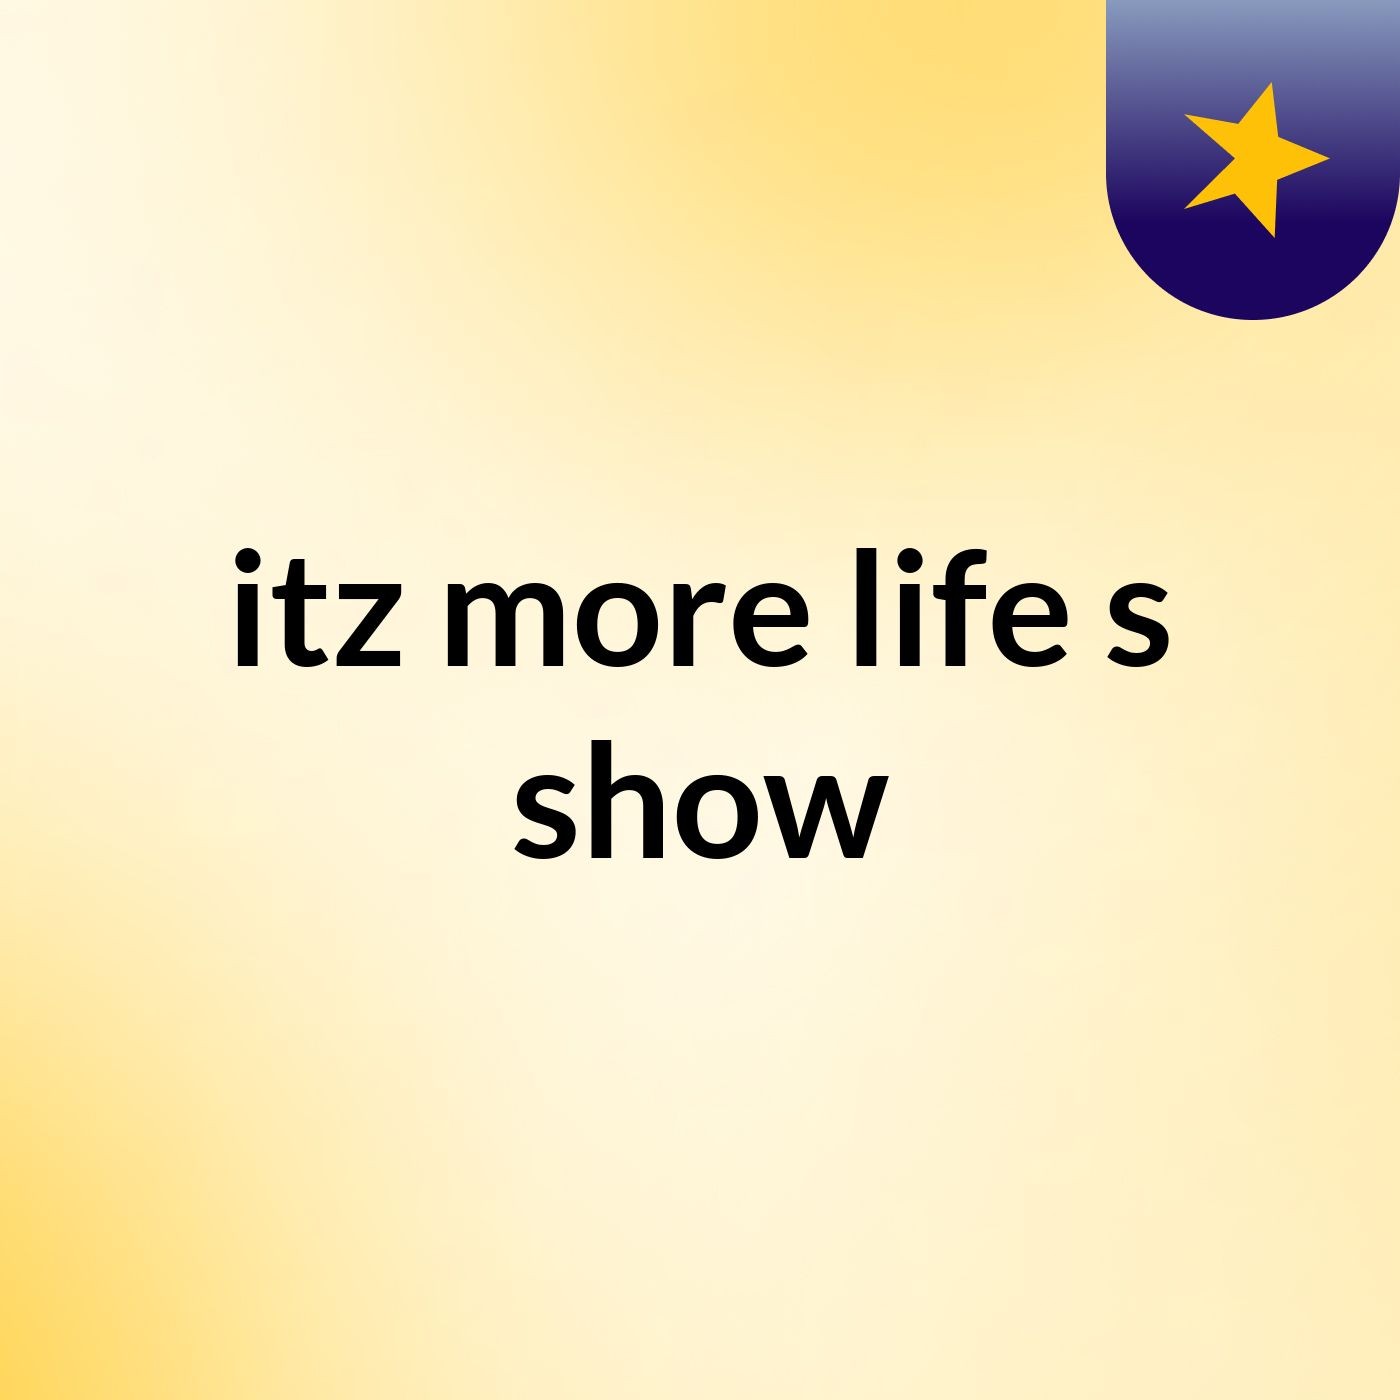 itz more life's show